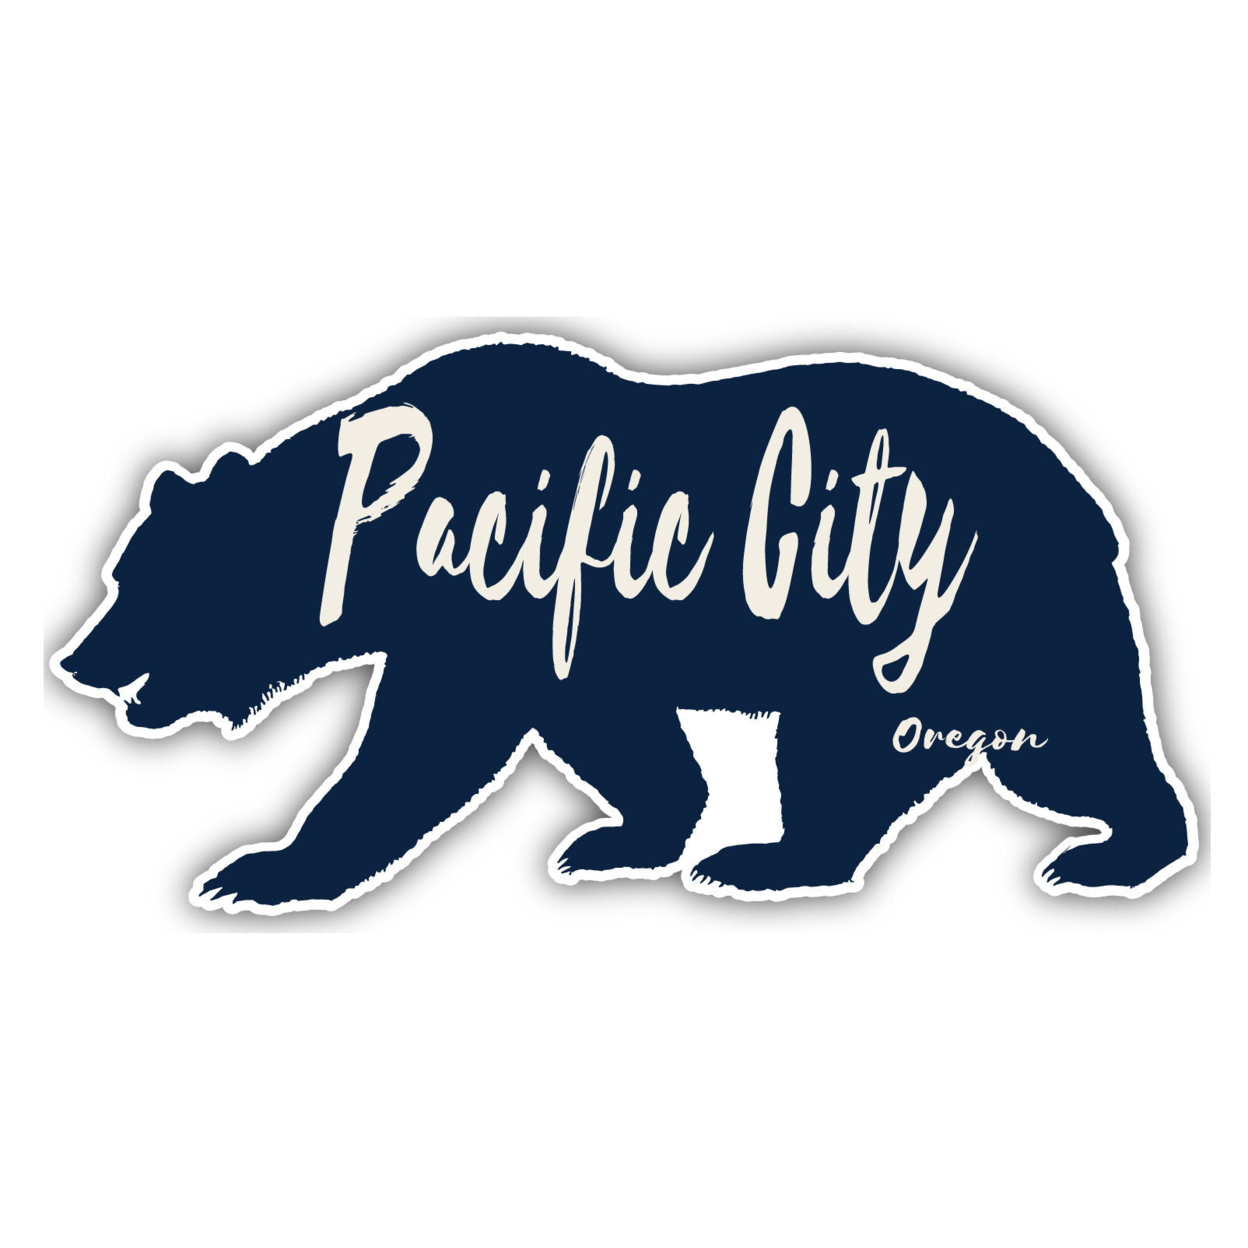 Pacific City Oregon Souvenir Decorative Stickers (Choose Theme And Size) - Single Unit, 4-Inch, Bear